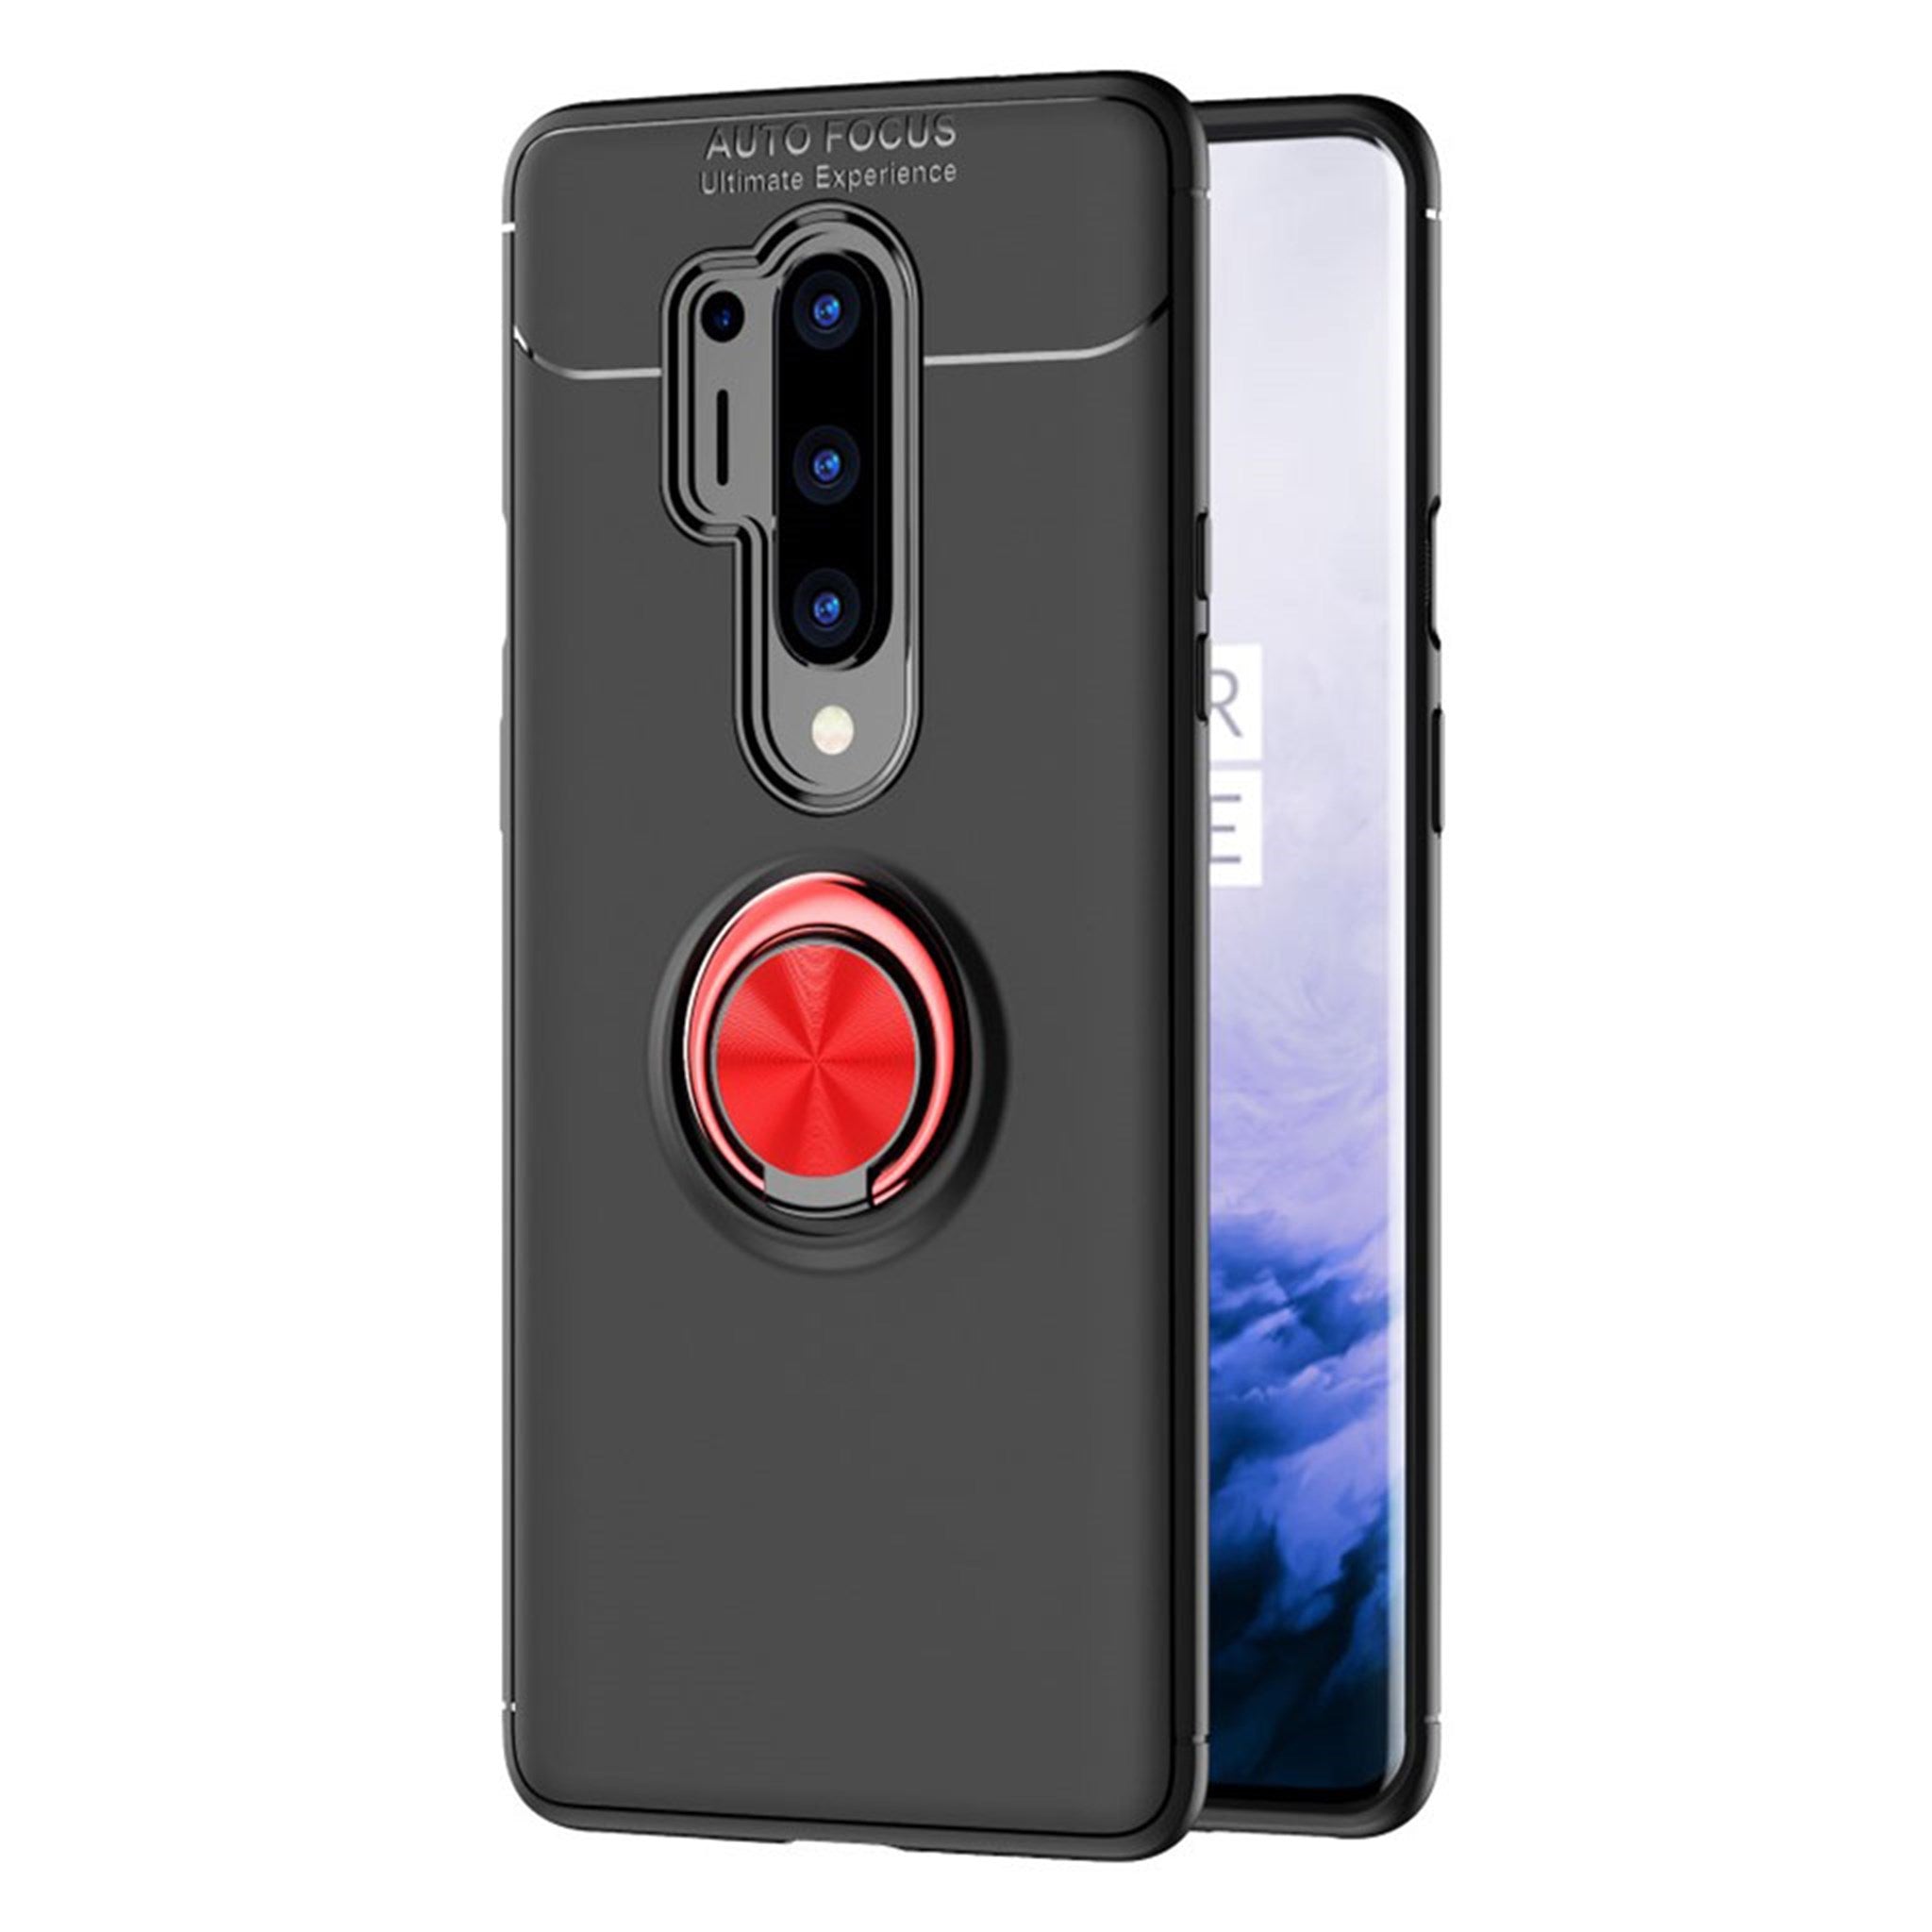 Ringo case - OnePlus 8 Pro - Black / Red